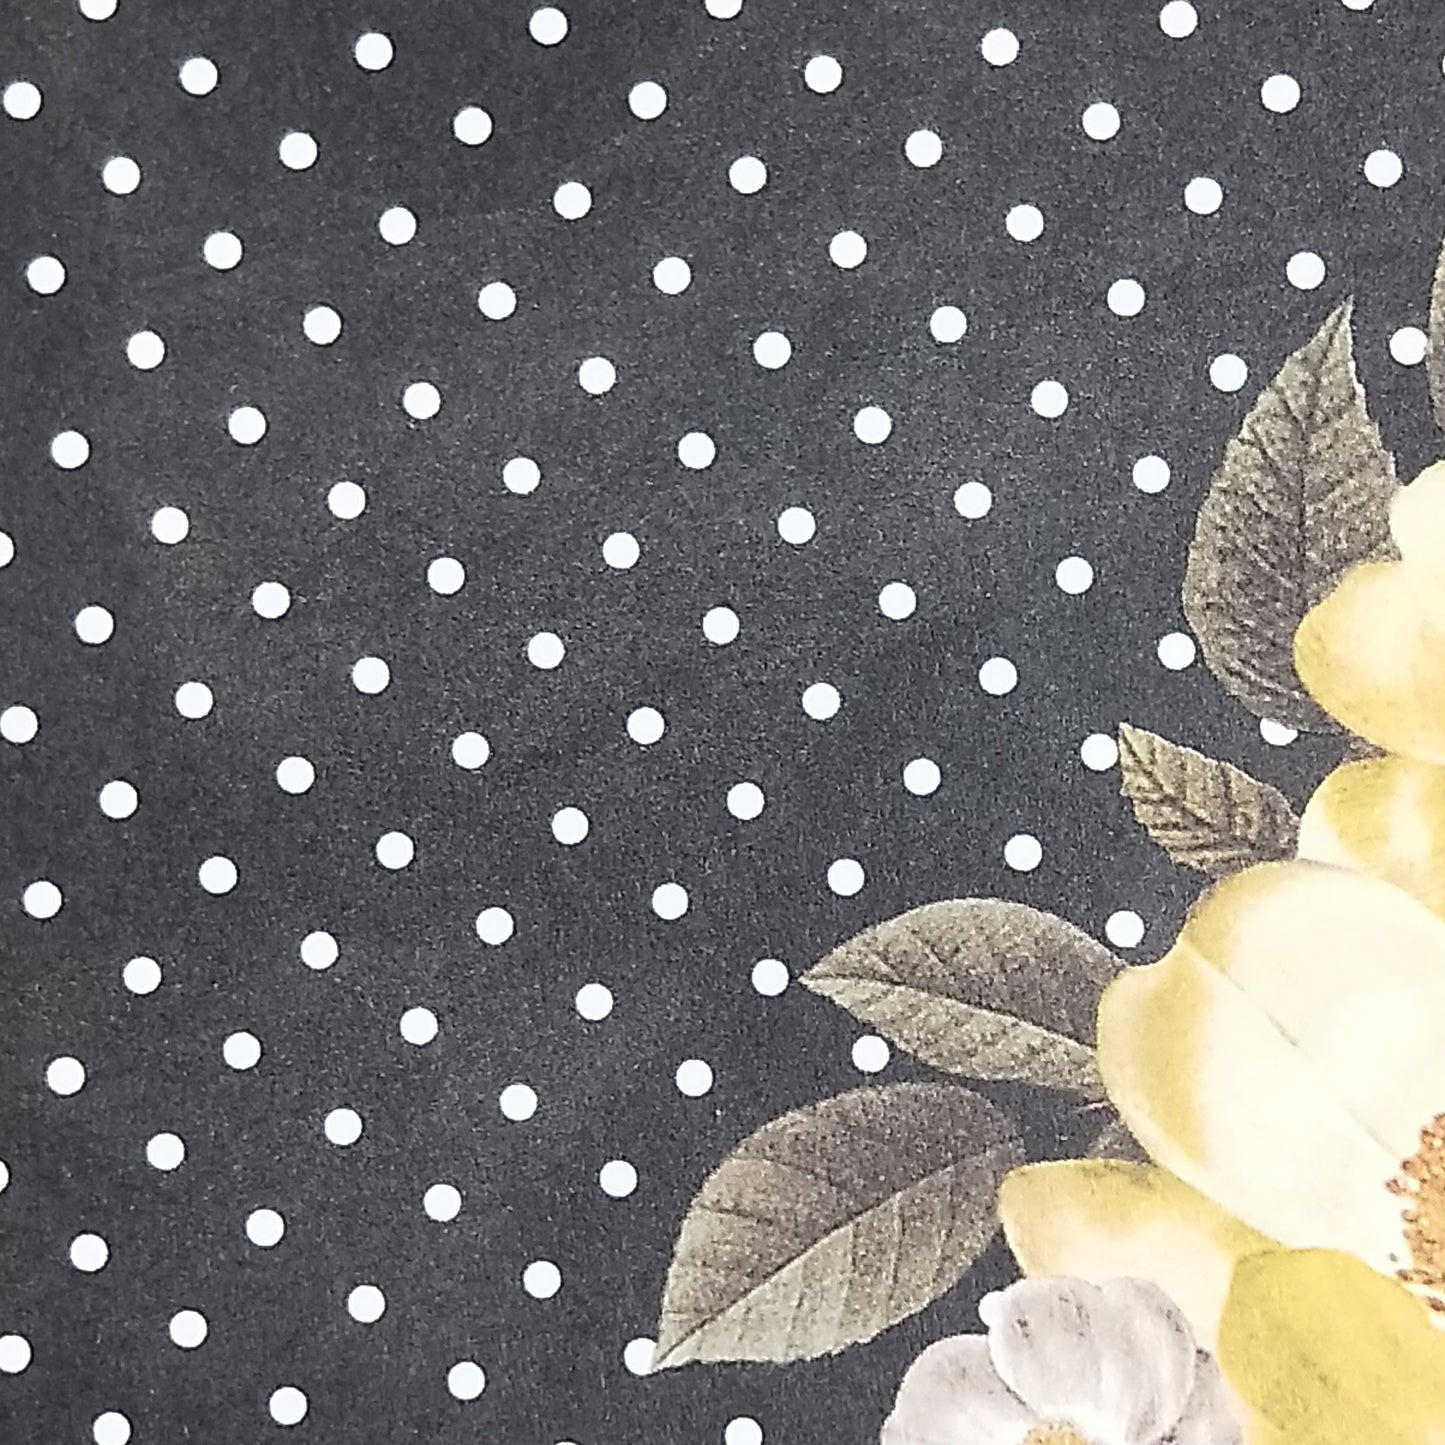 Wilddori 40 sheet Blank Insert - Black Dots and Florals